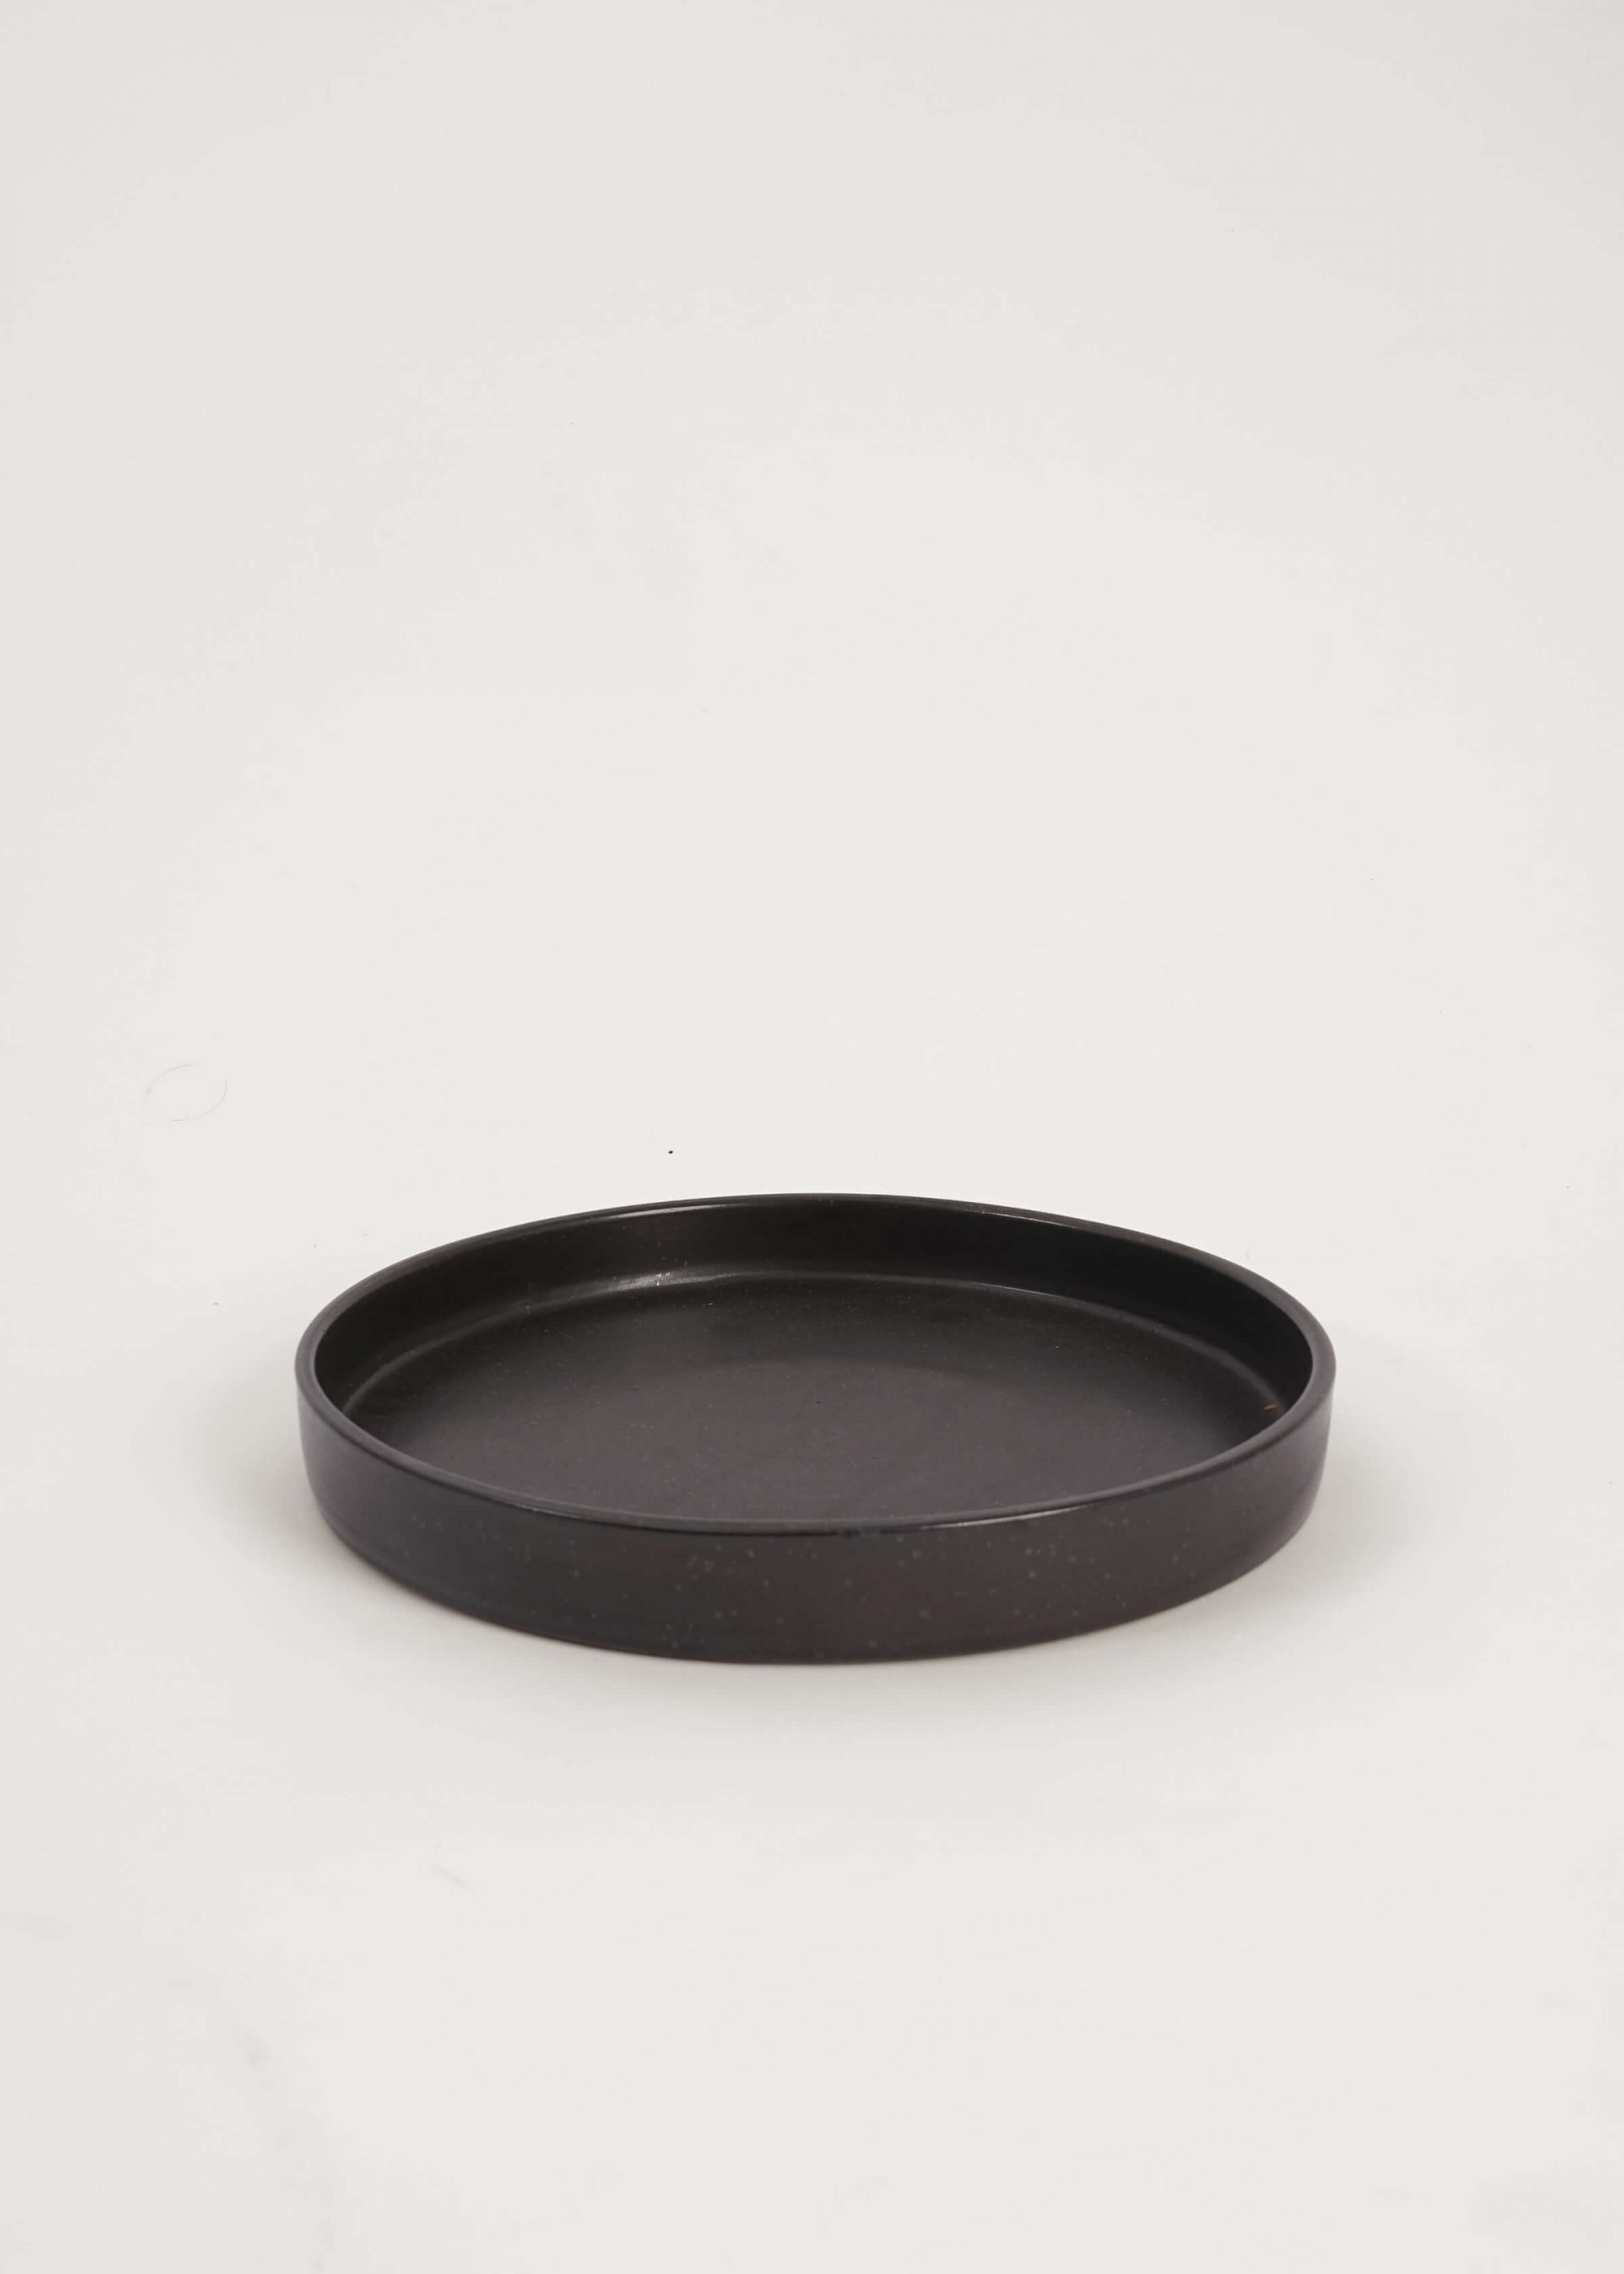 Product image for »Geodesic Black« Large Tray Plate Ménage | Genuine Stoneware Ceramic